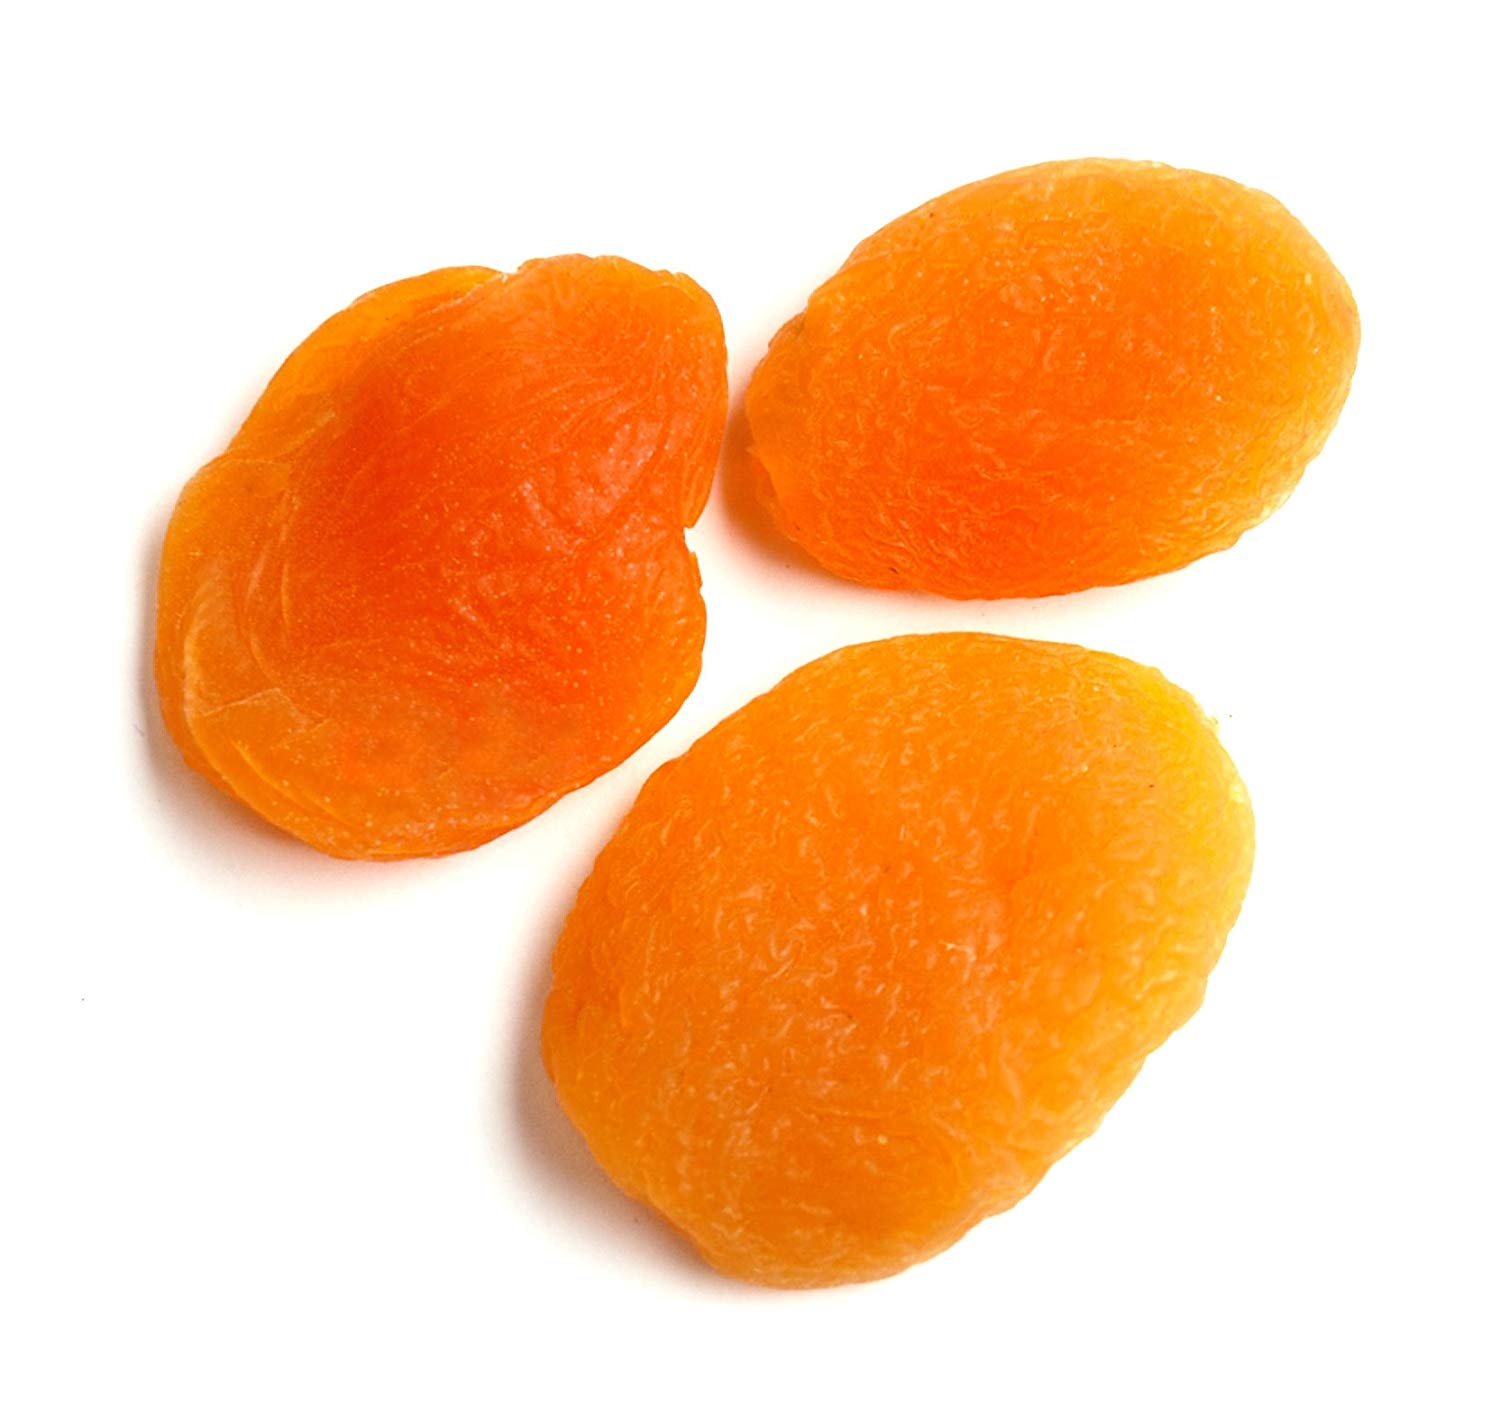 Whole Turkish Apricots #4, 1 Lb Bag: Amazon.com: Grocery & Gourmet Food